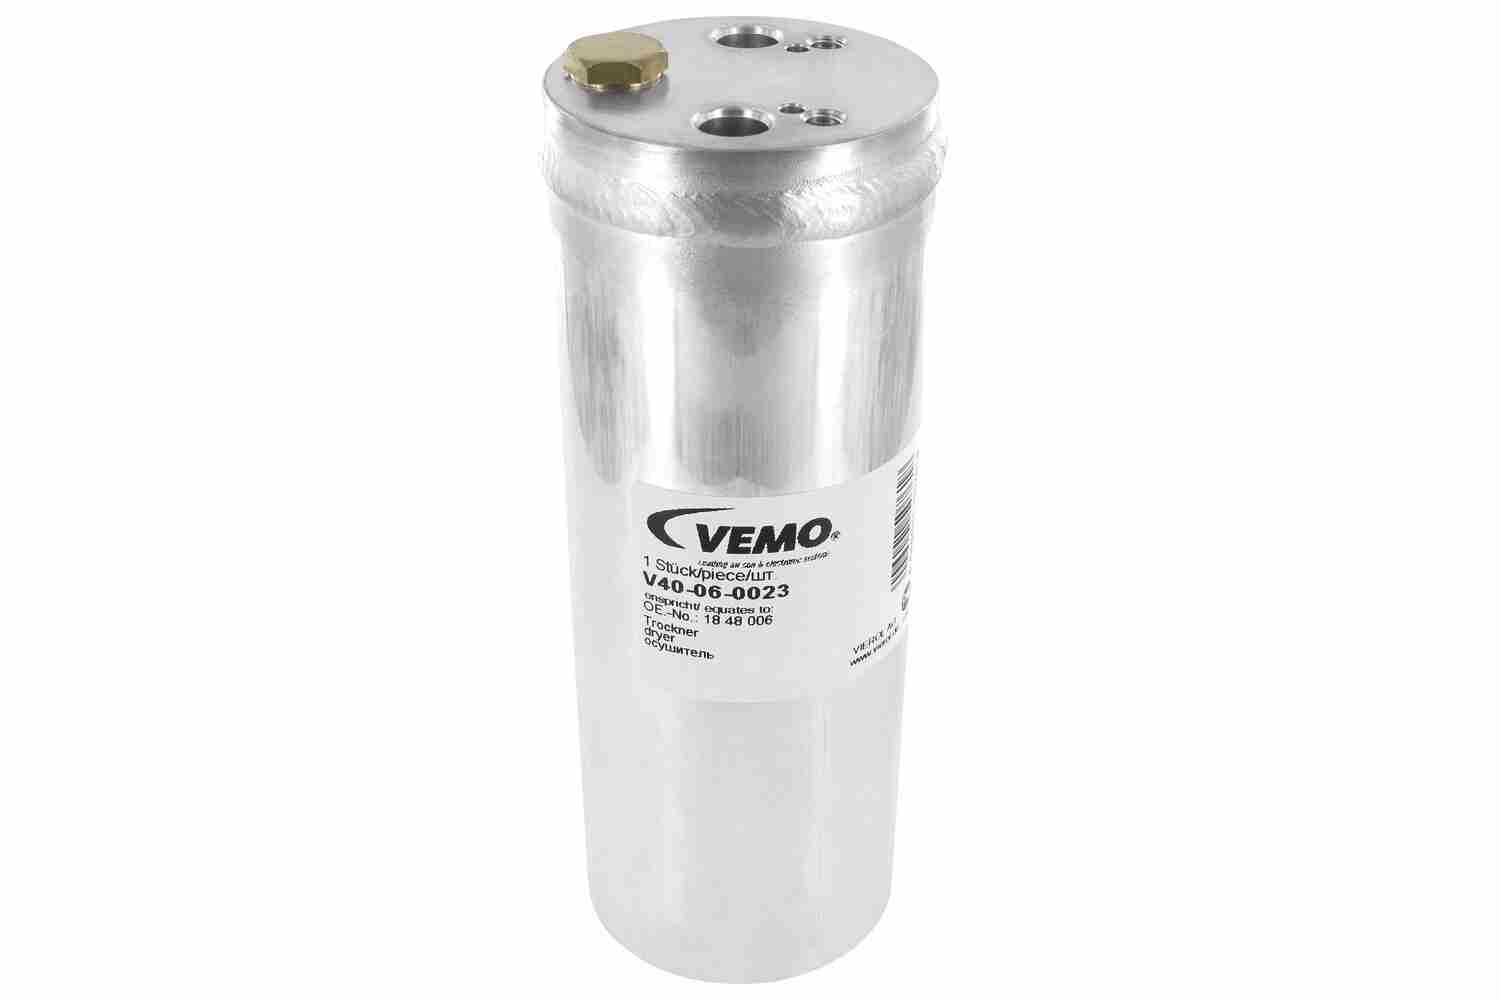 Vemo Airco droger/filter V40-06-0023